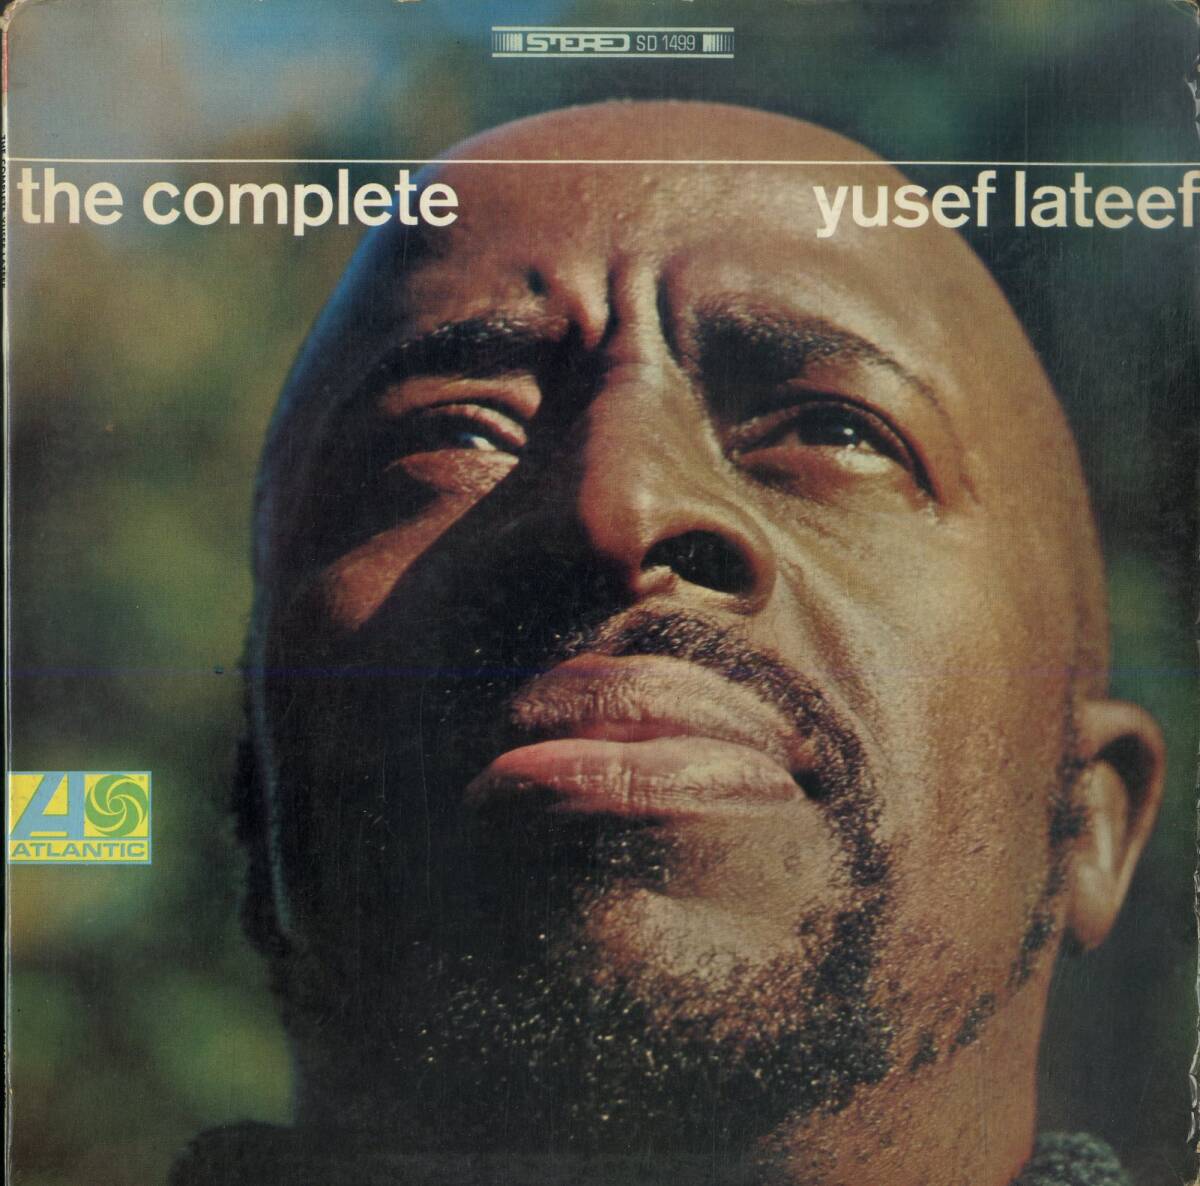 A00593930/LP/yusef*la чай f(YUSEF LATEEF)[The Complete Yusef Lateef (SD-1499* post bap* Jazz вентилятор k)]